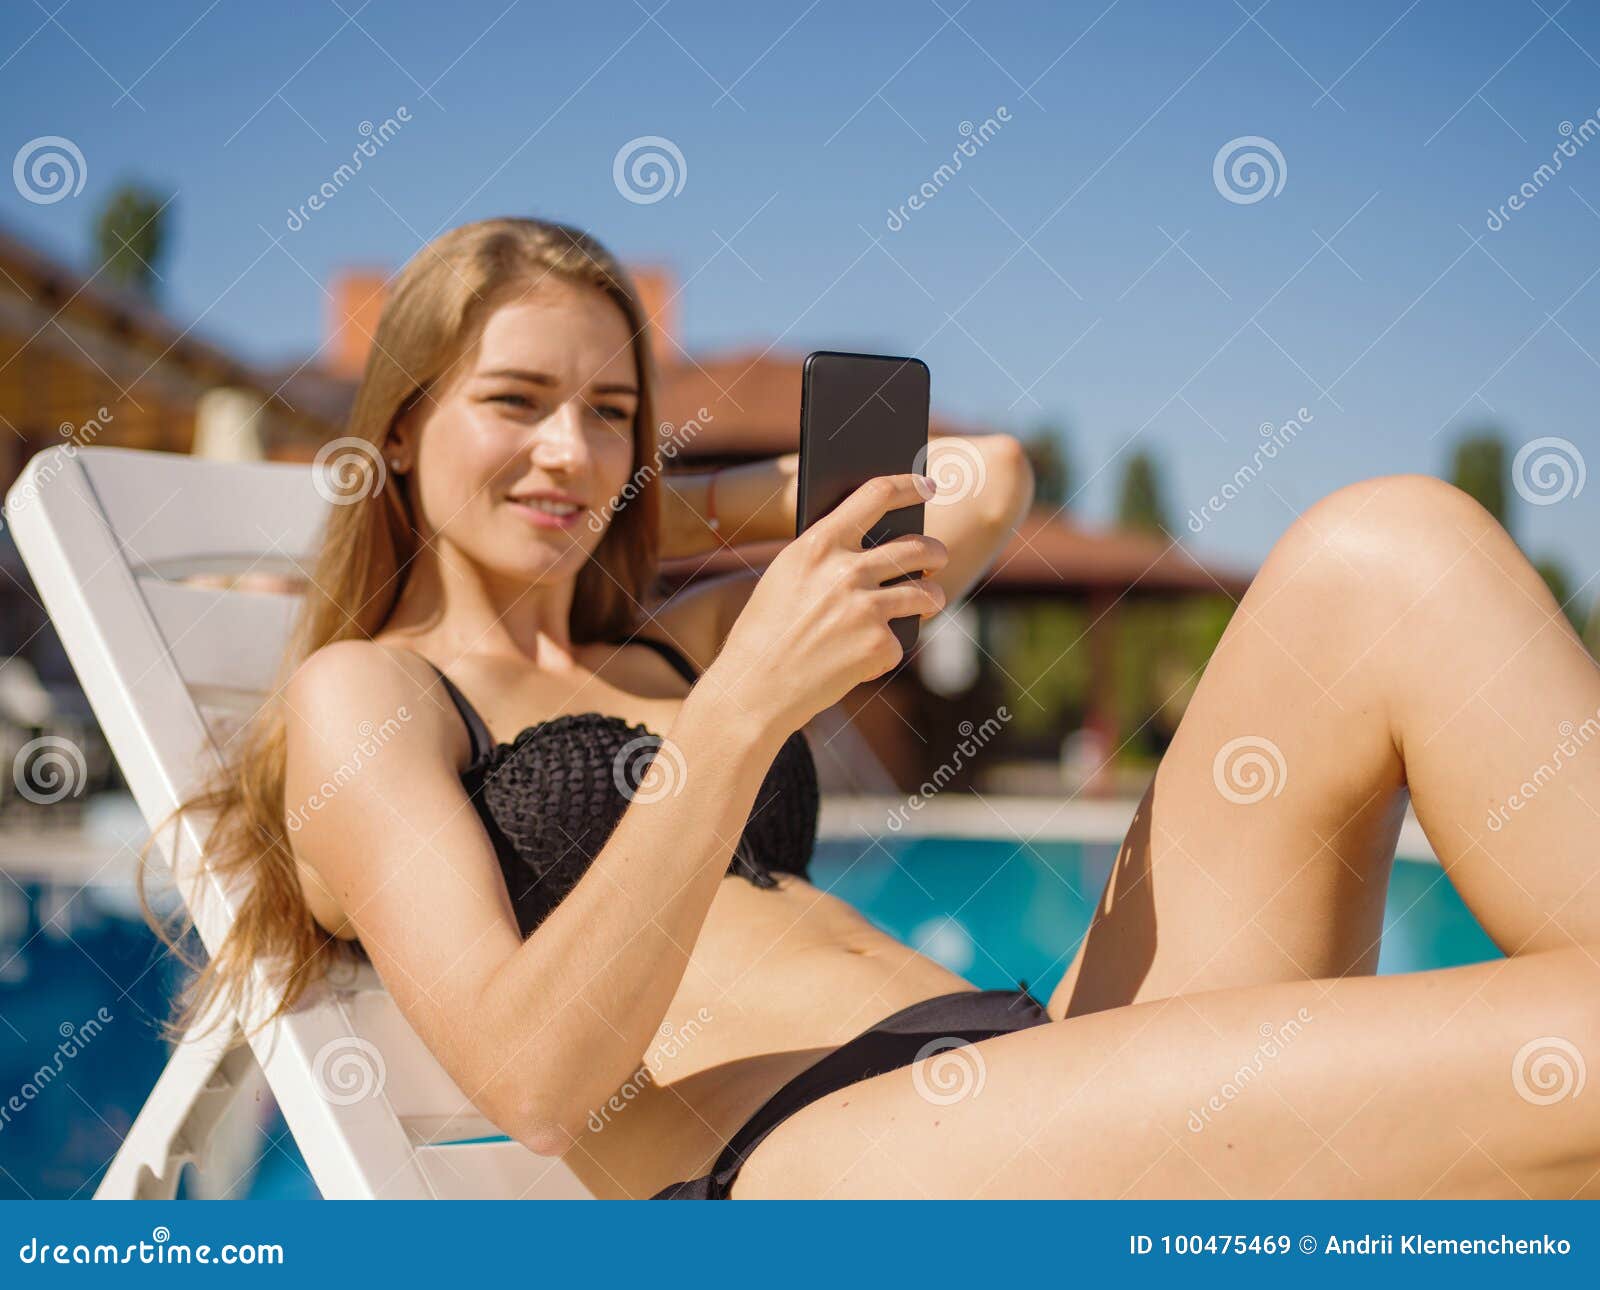 cute blonde girl bikini selfie